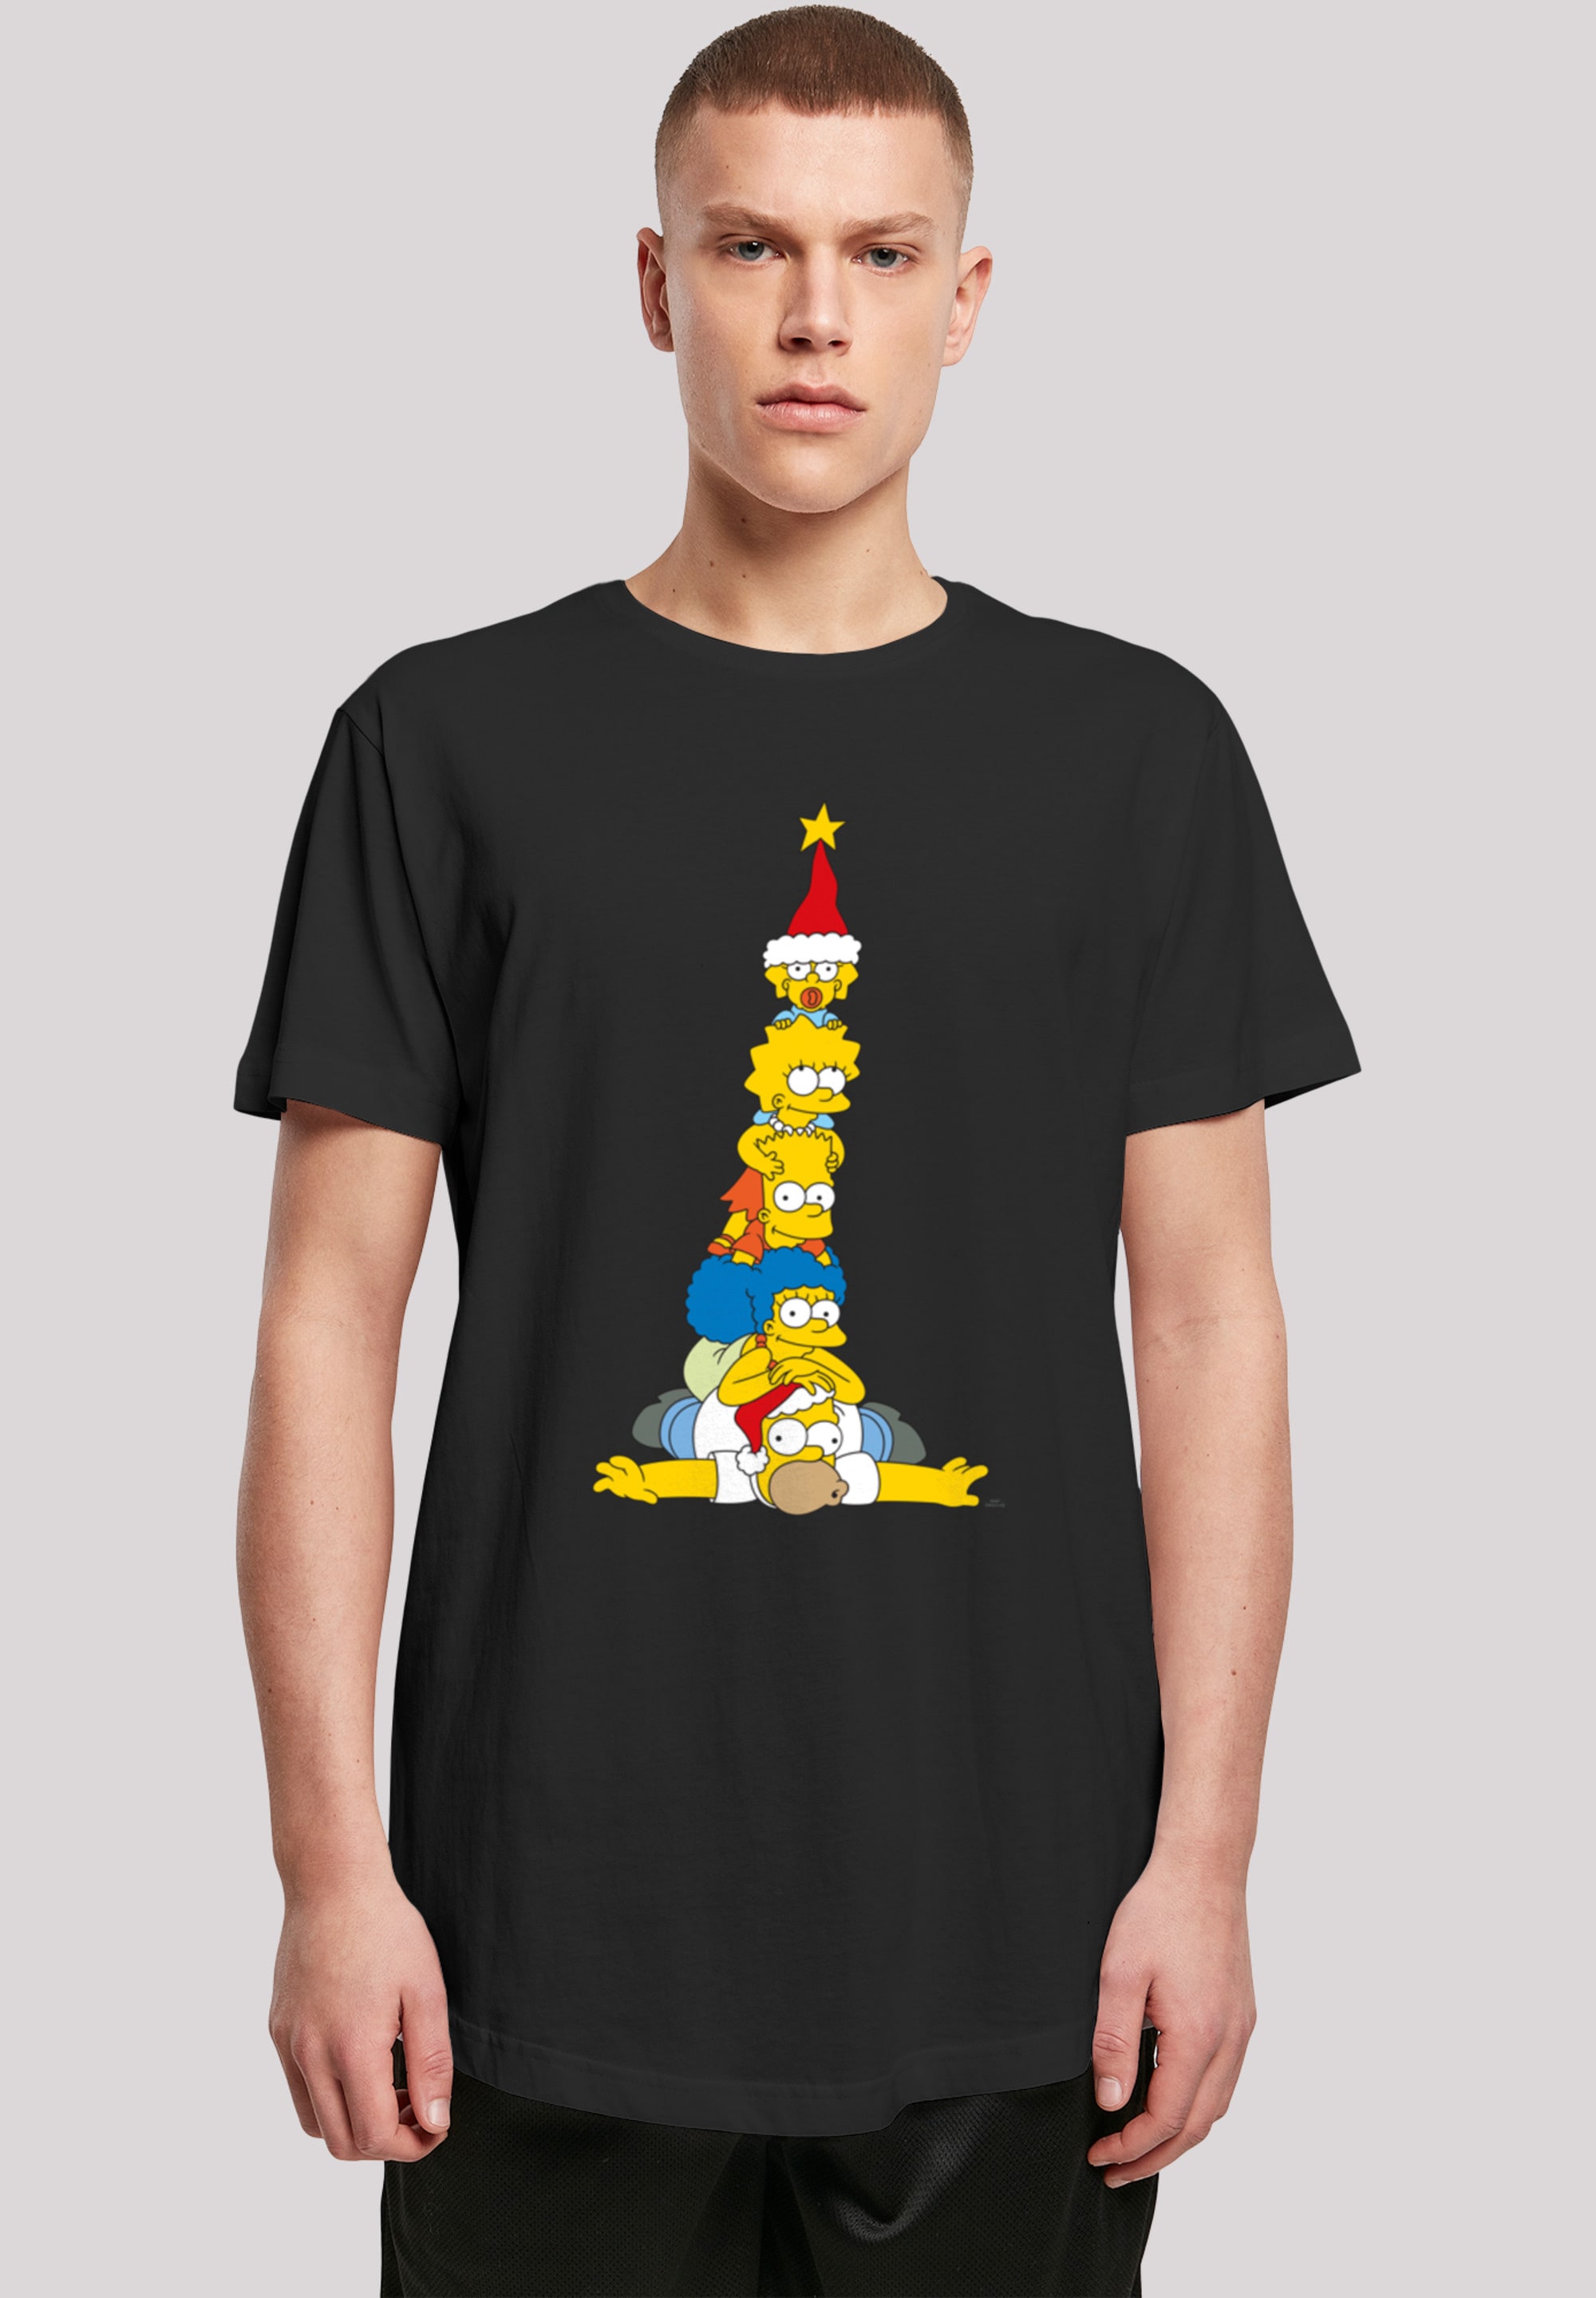 Christmas Friday BAUR »The | Print T-Shirt Family Simpsons Black Weihnachtsbaum«, F4NT4STIC